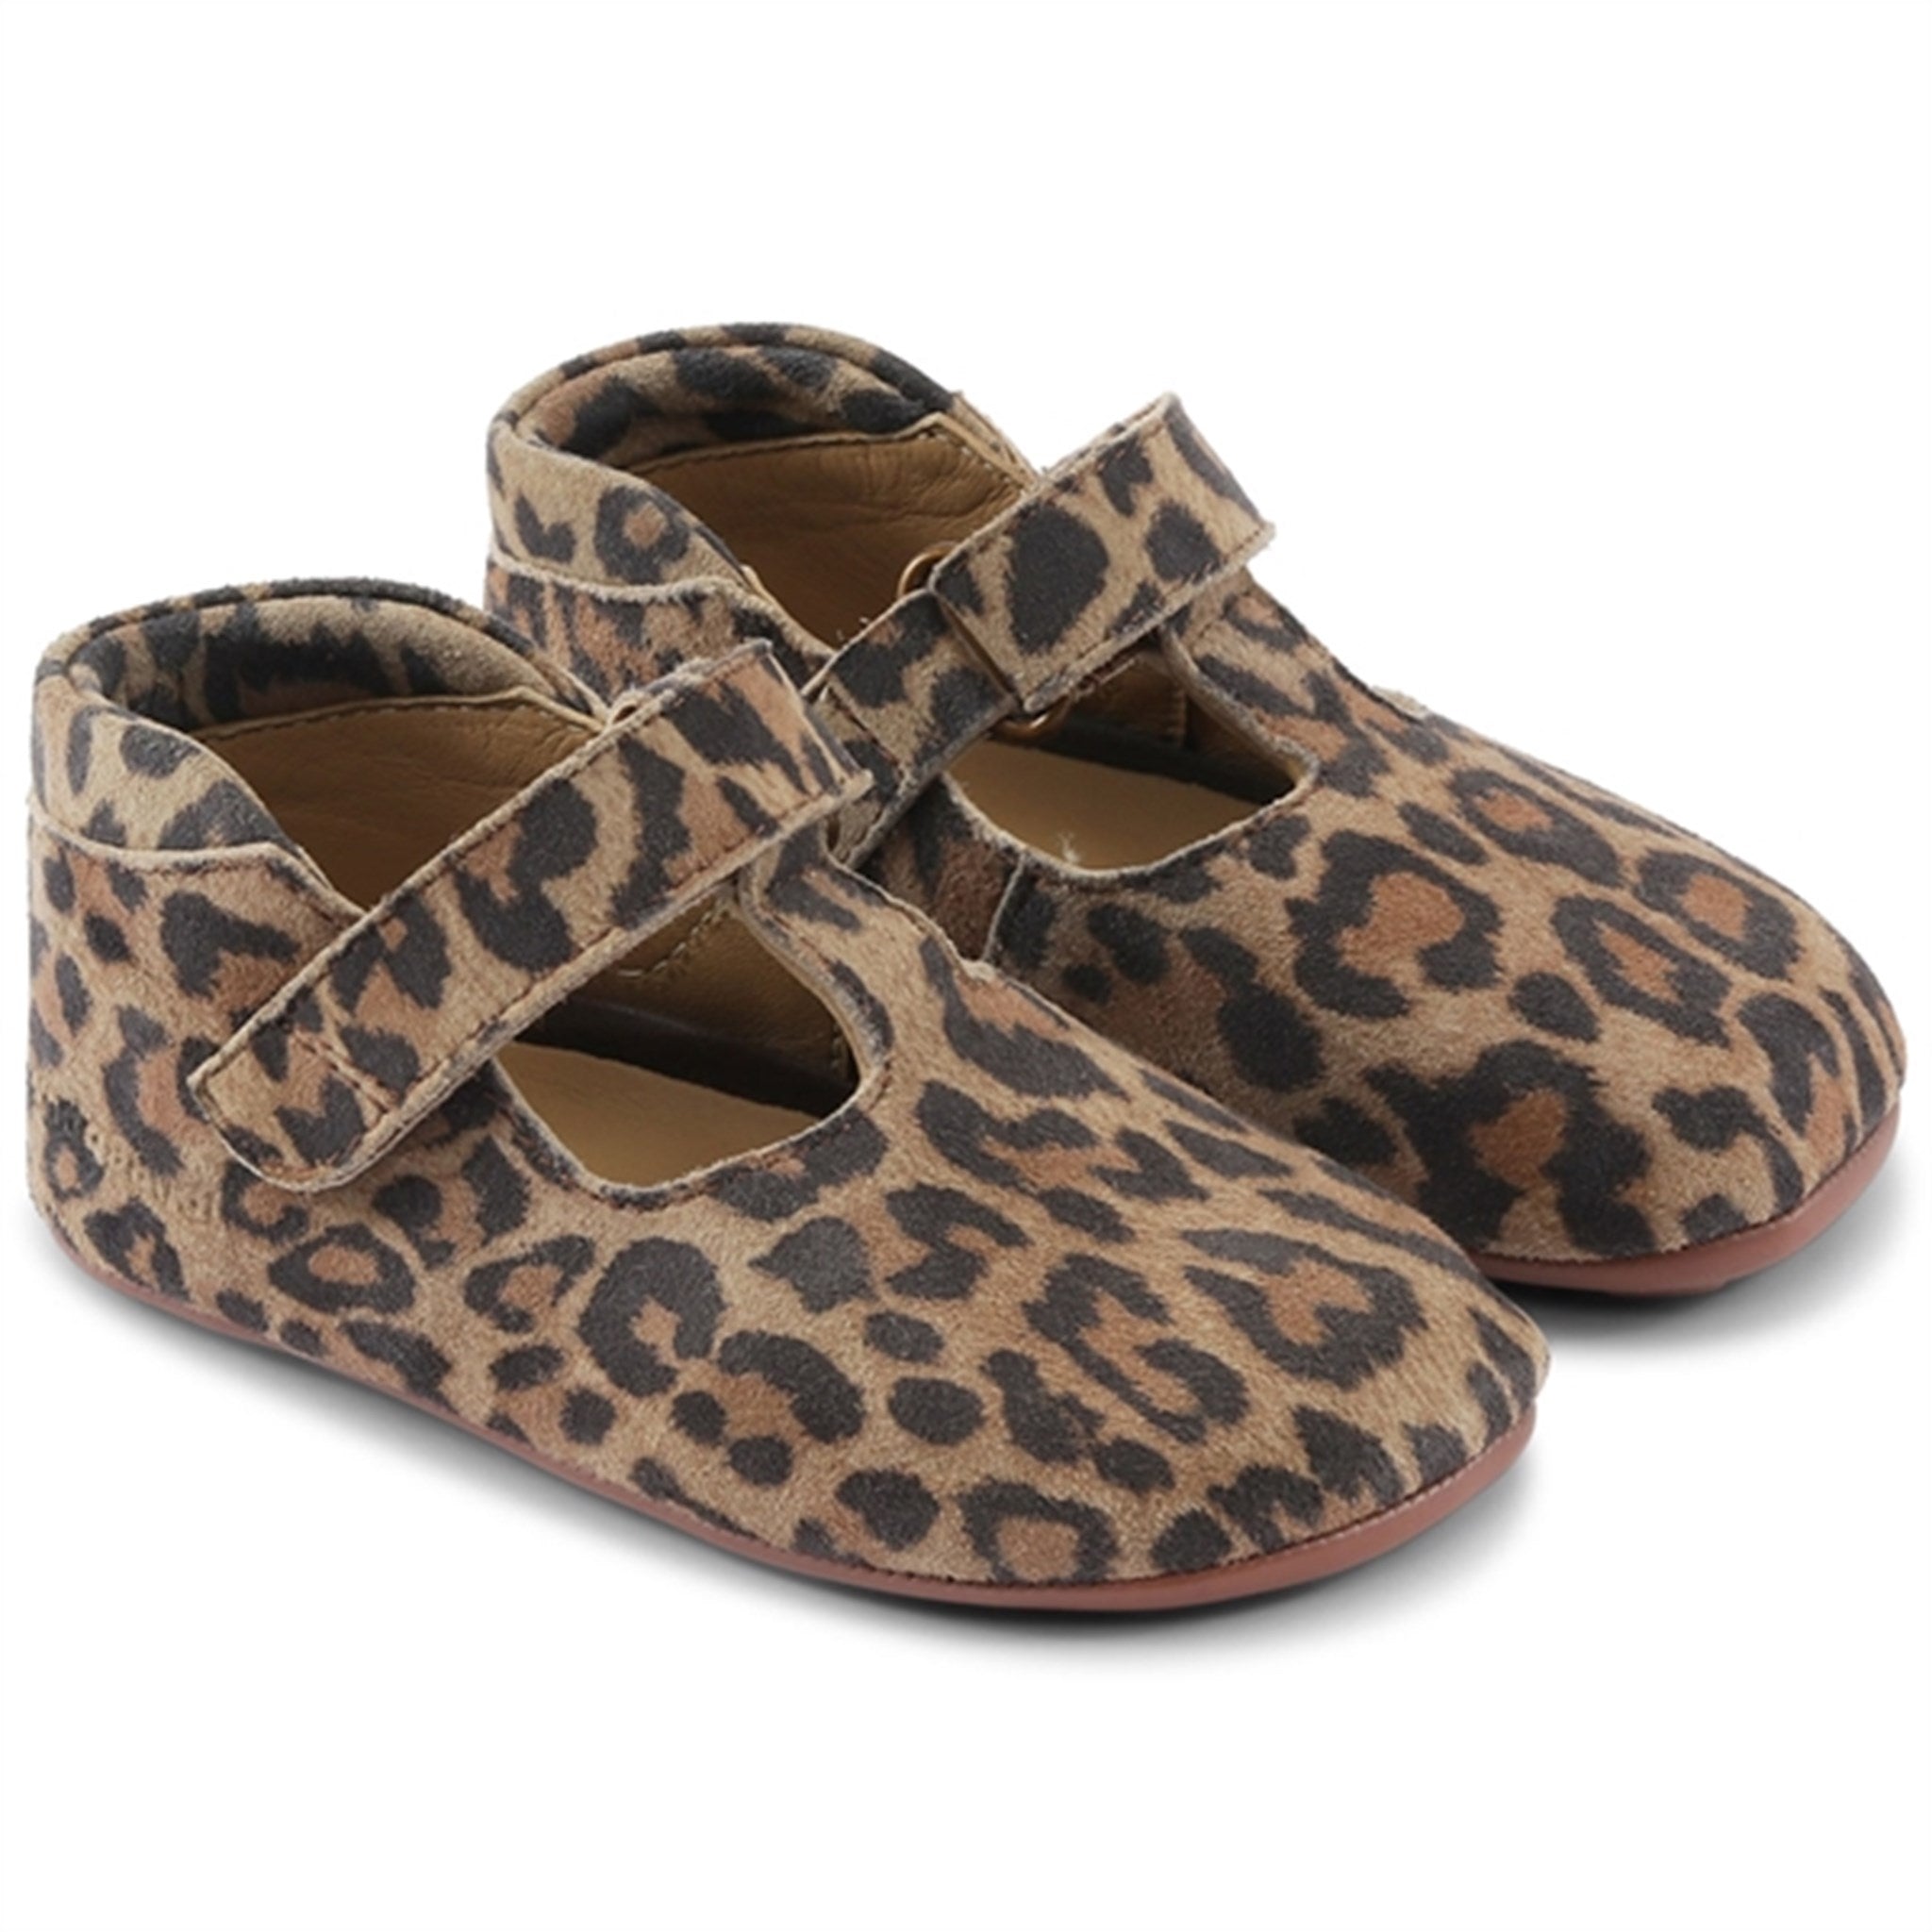 Bundgaard Mary ll Indoor Shoes Leopard 3